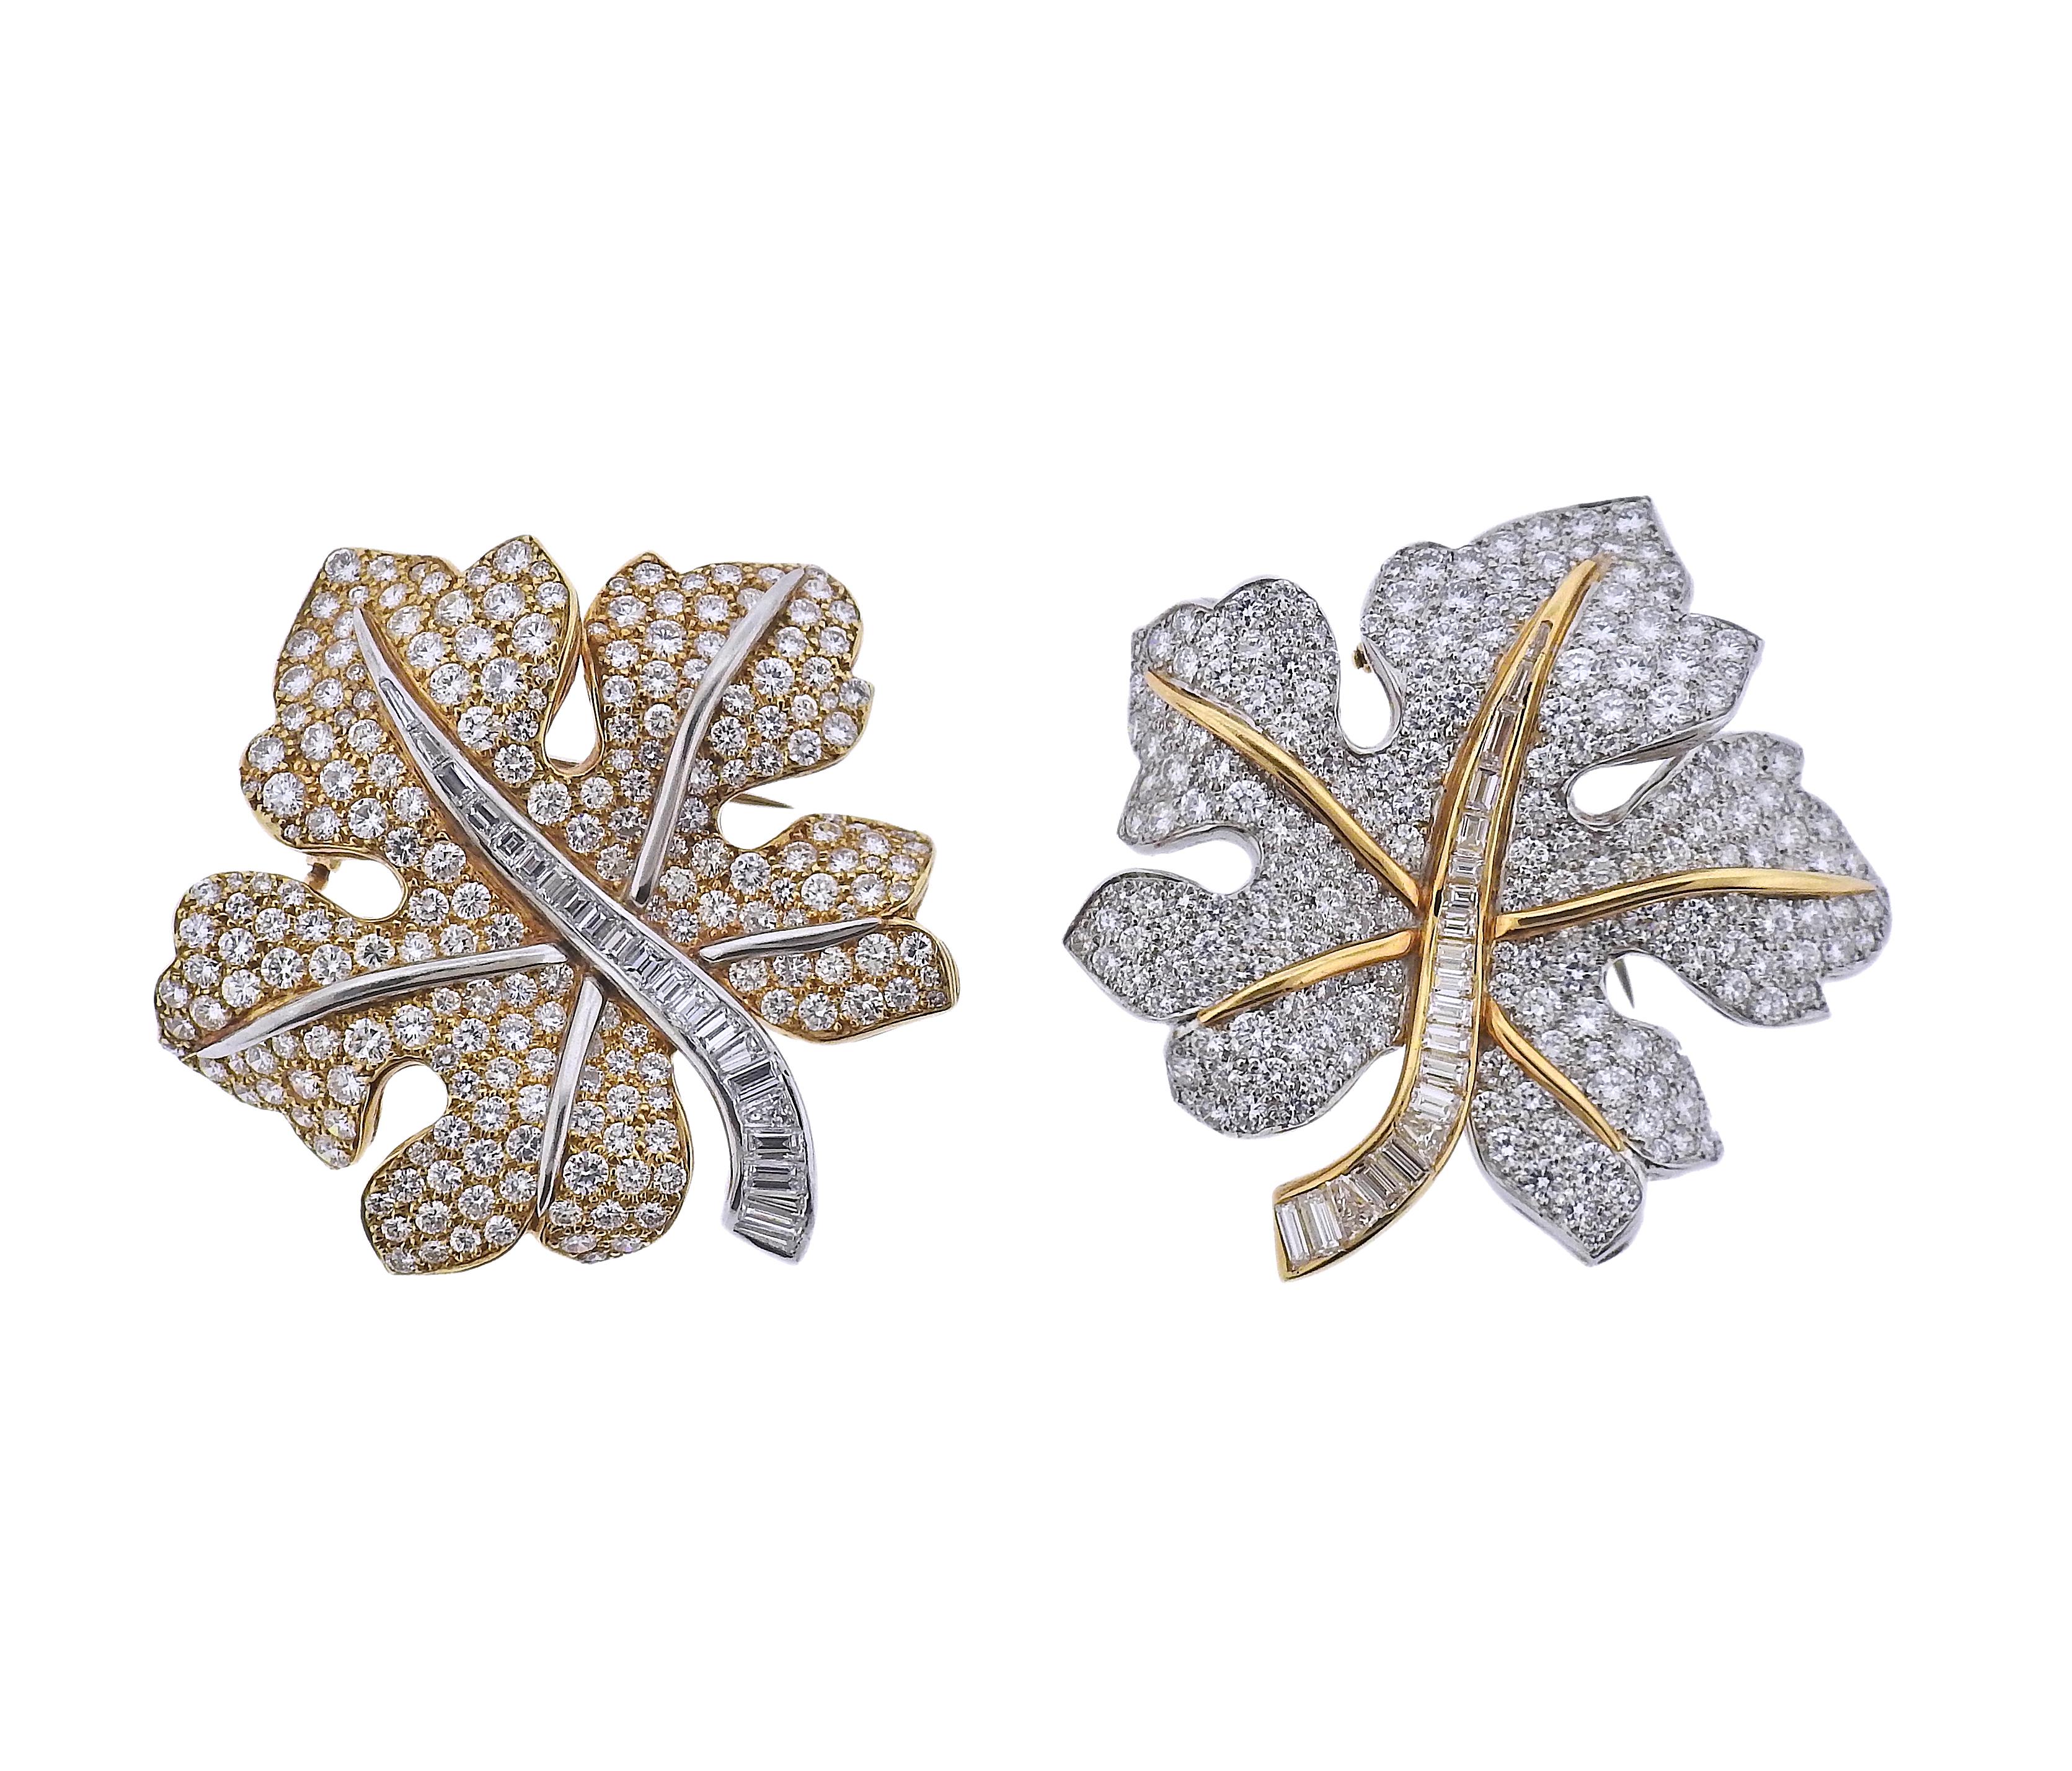 Ensemble de deux broches à grandes feuilles, en or 18 carats et en platine, serties d'un total d'environ 12 carats de diamants. Les broches mesurent 2